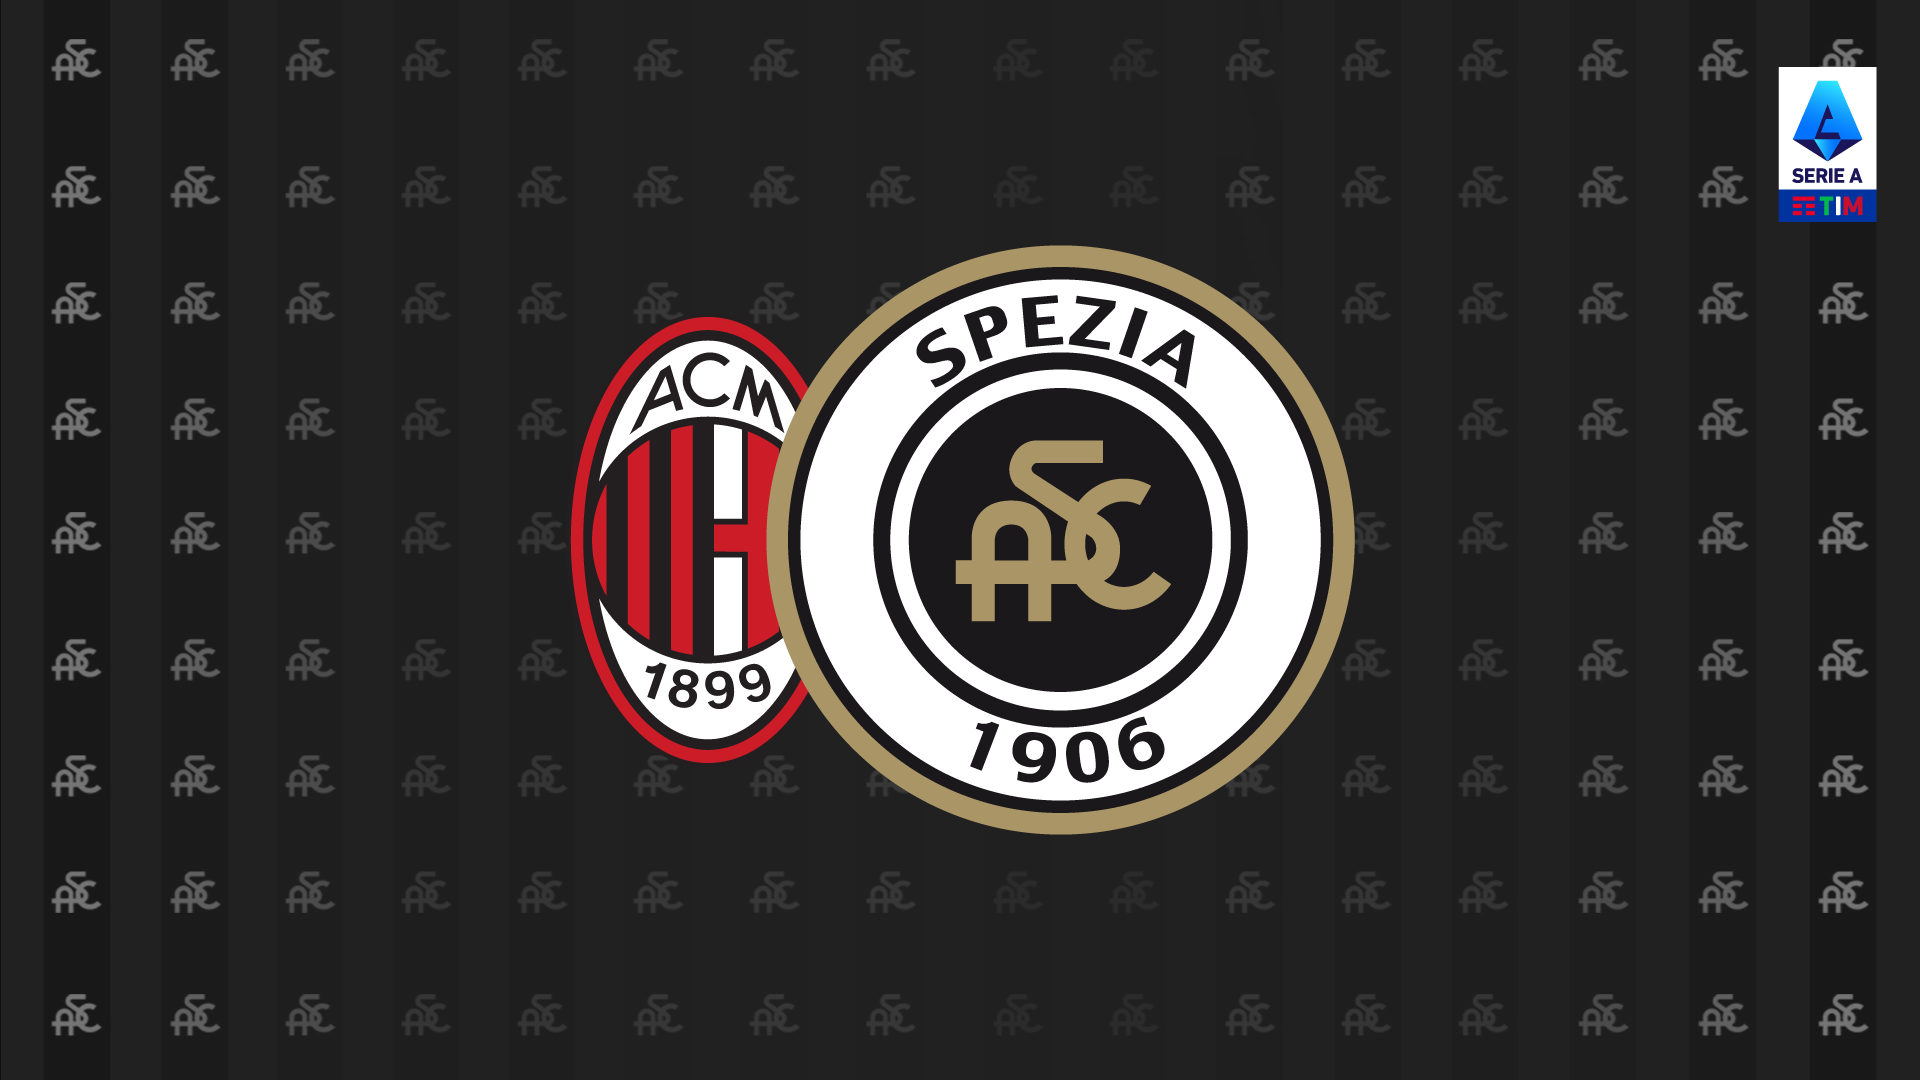 Serie A TIM 21/22: Milan-Spezia 1-2